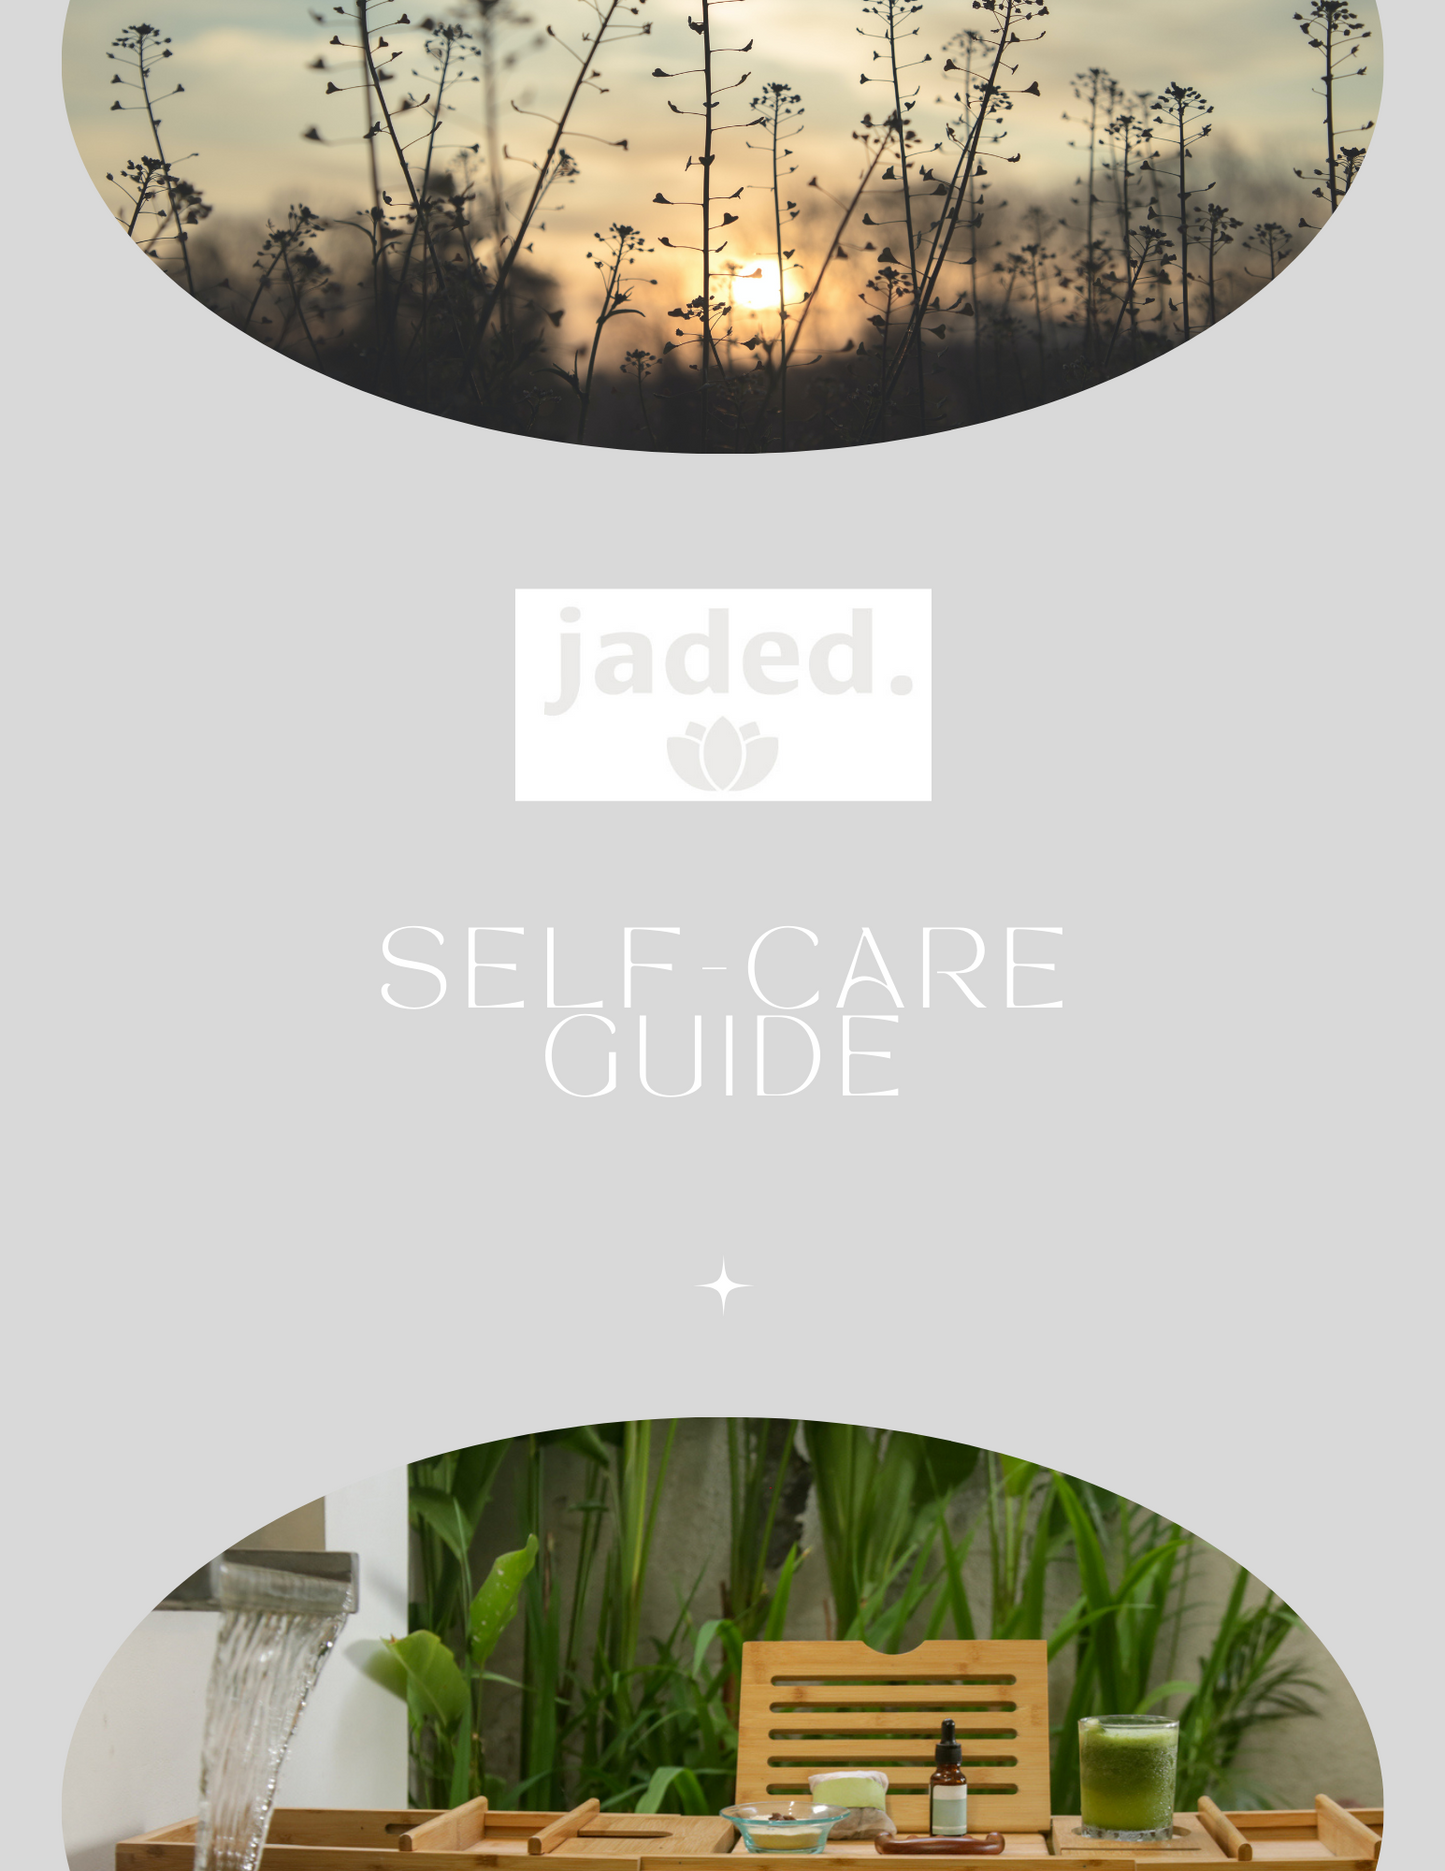 Jaded Self Care Guide